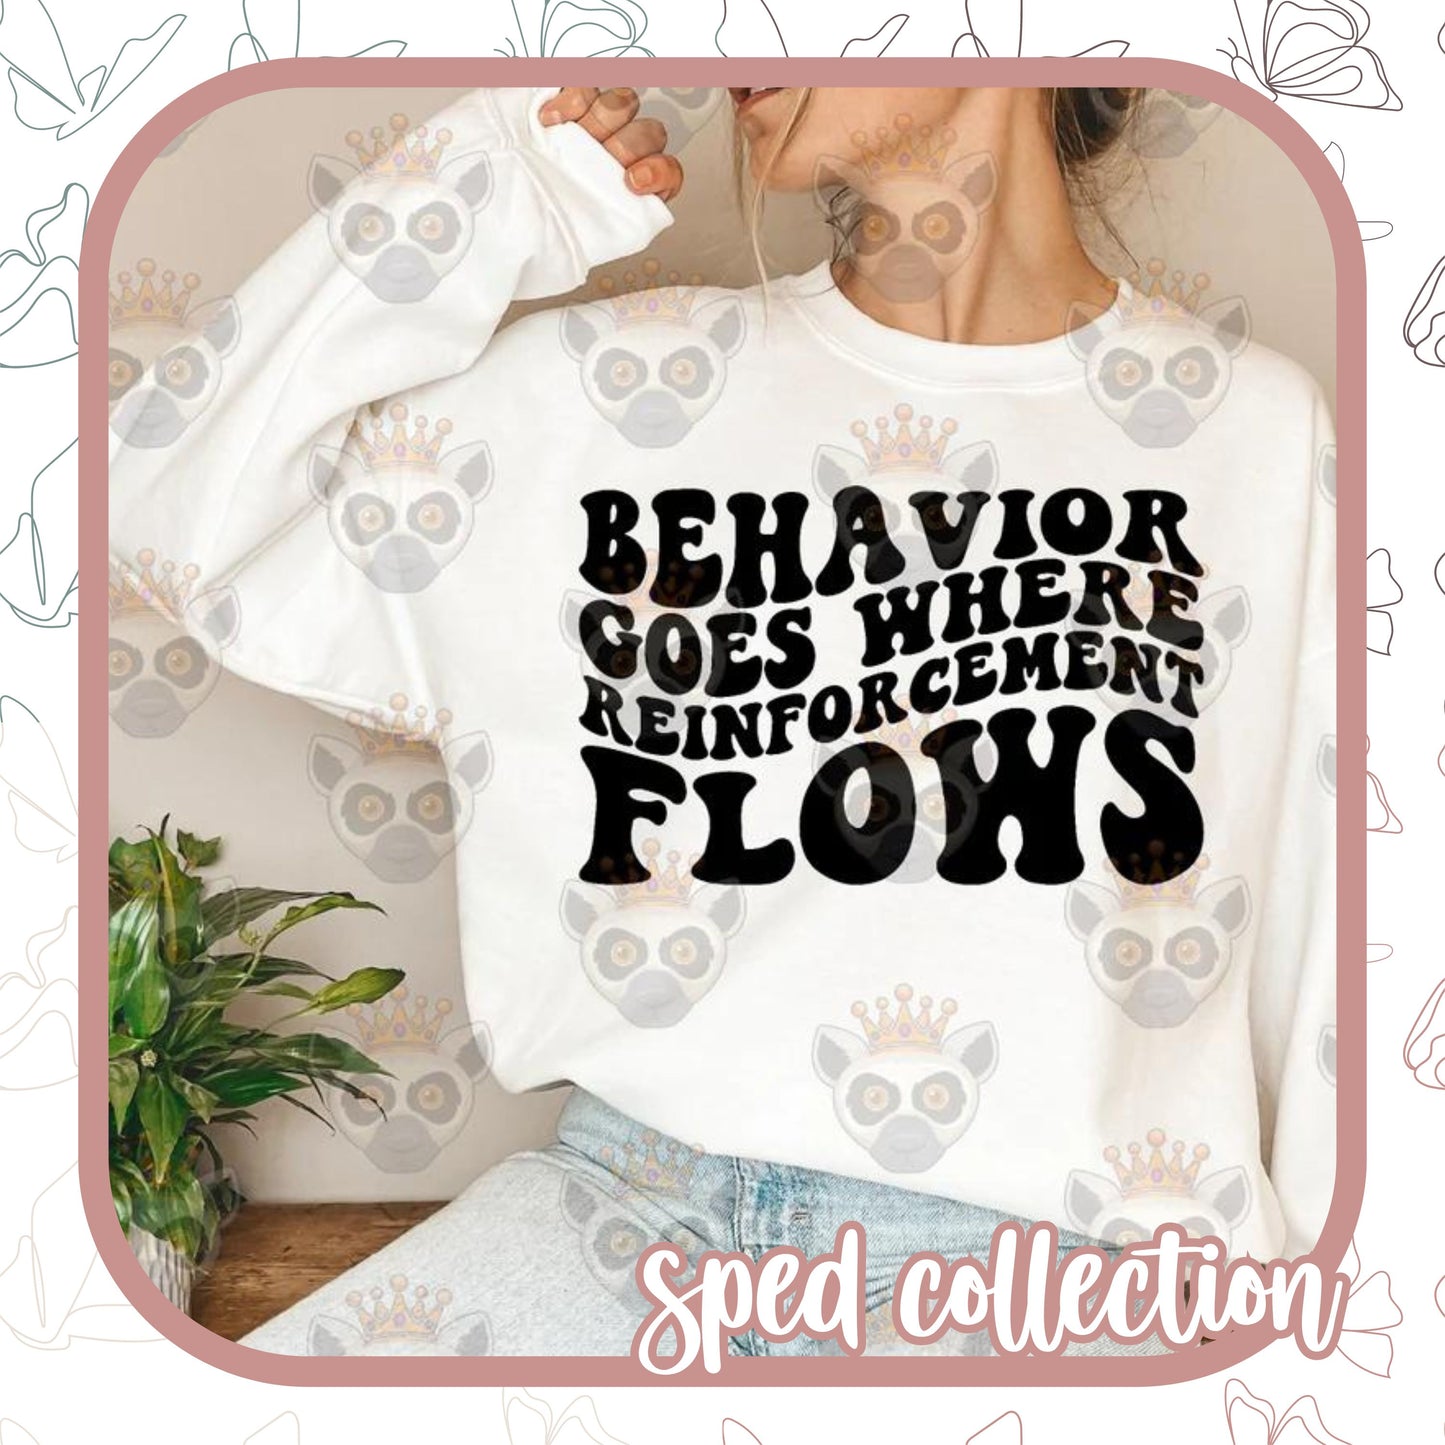 Behavior Goes Where Reinforcement Flows B&W Special Education Tee/Sweatshirt